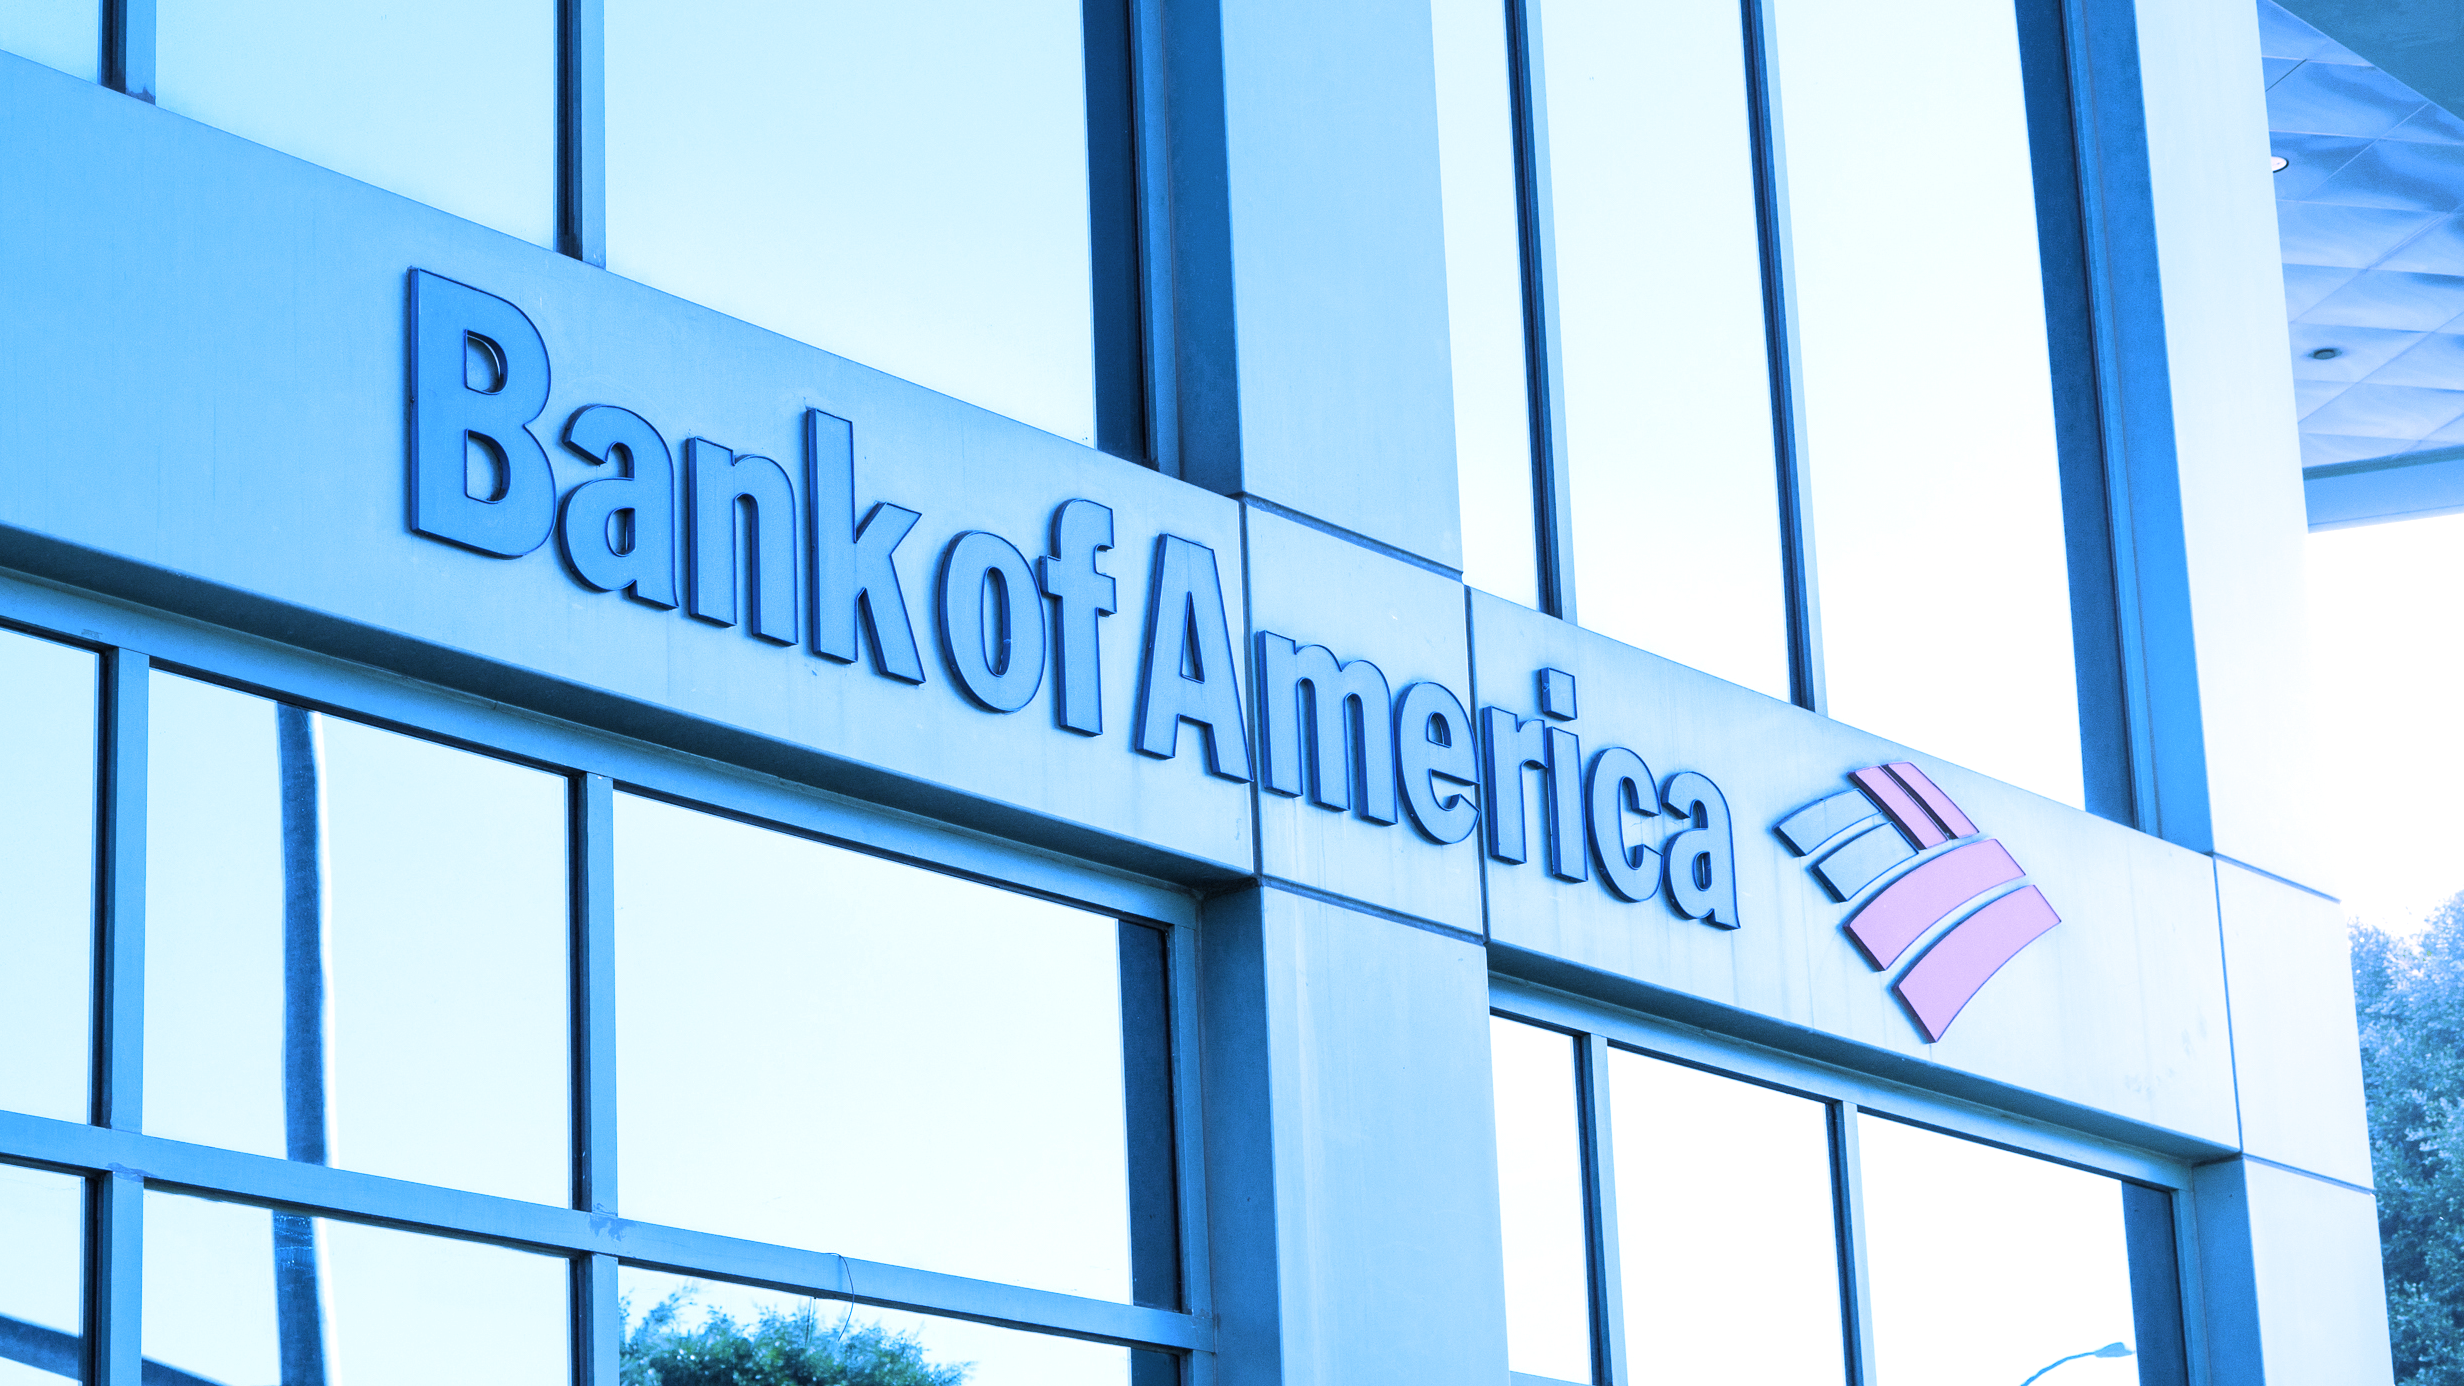 Net Flows Suggest ‘Bullish’ Crypto Market Momentum: Bank of America